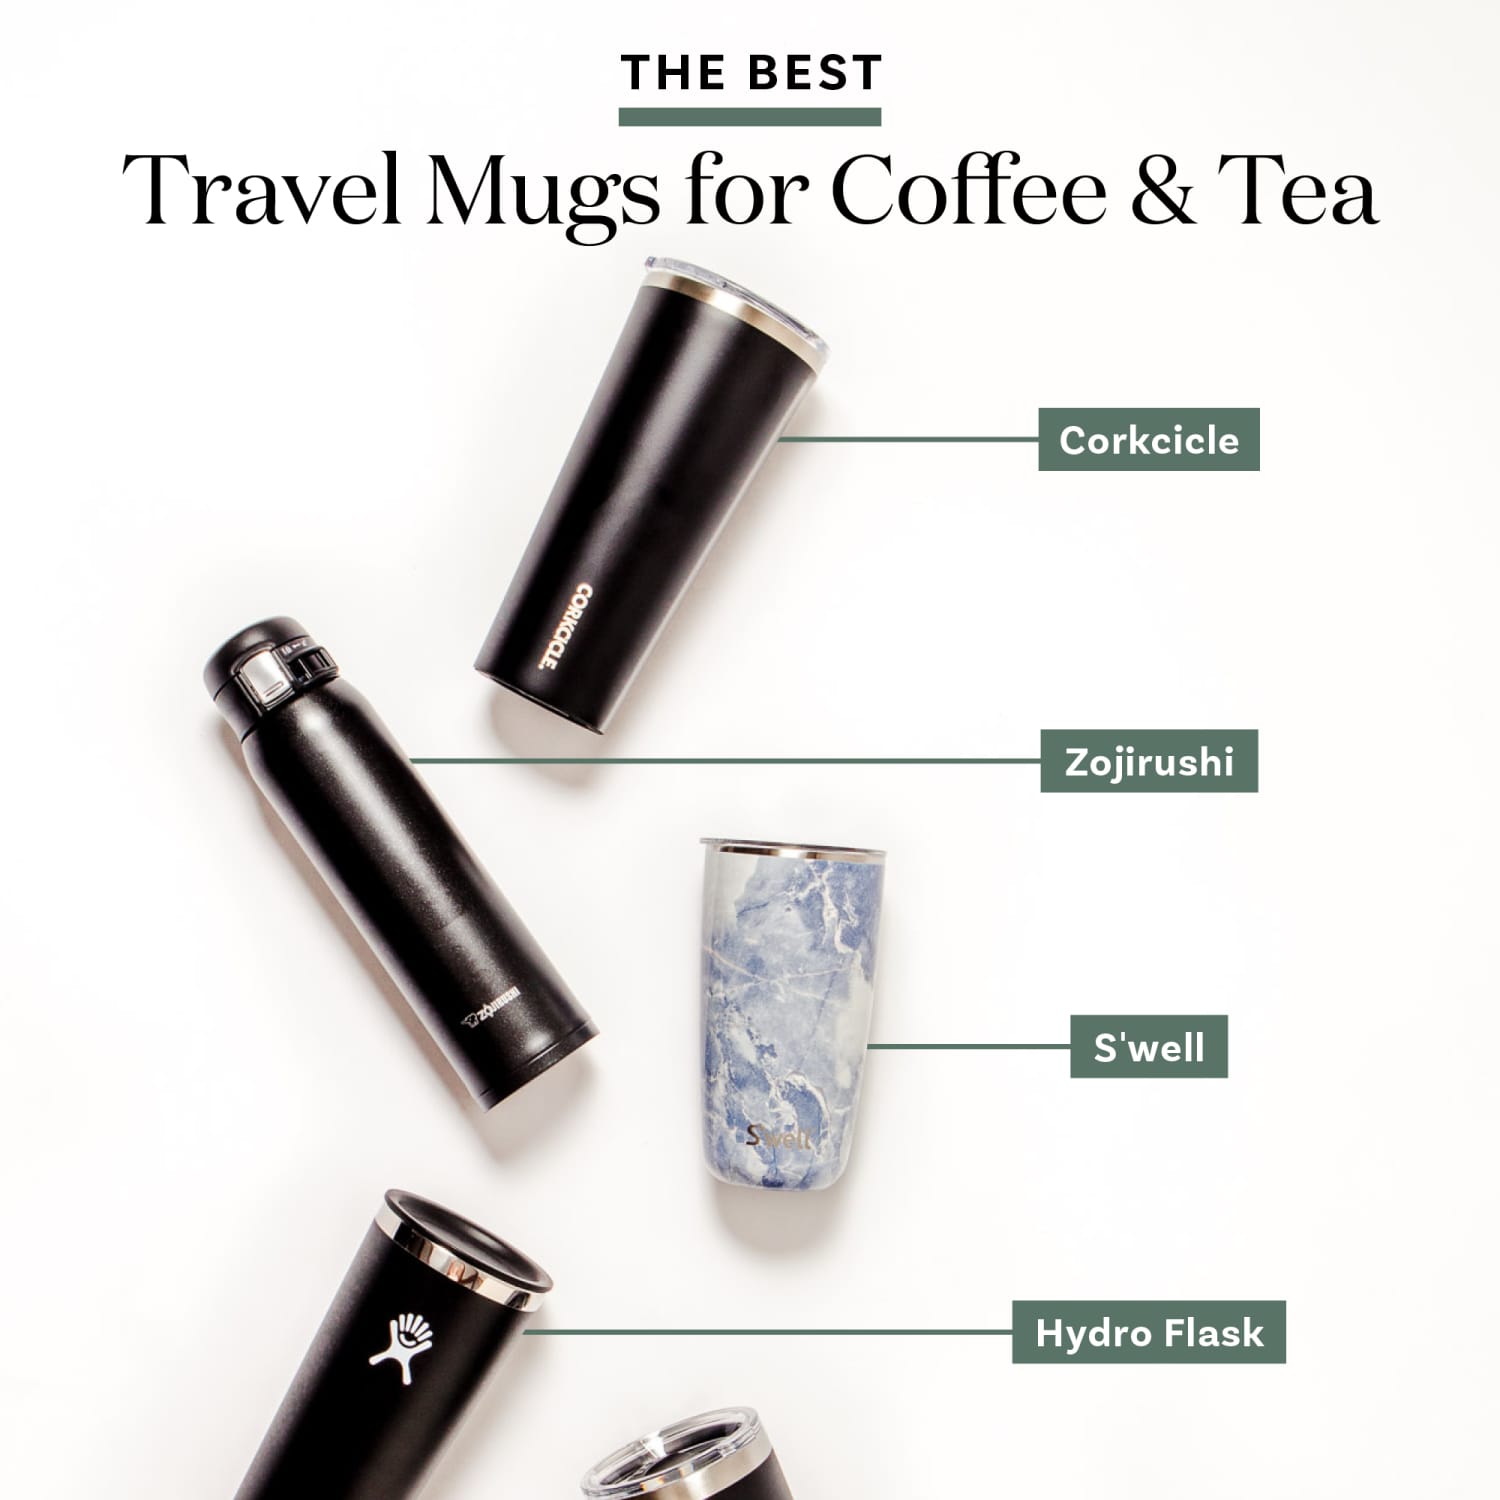 https://cdn.apartmenttherapy.info/image/upload/f_jpg,q_auto:eco,c_fill,g_auto,w_1500,ar_1:1/k%2FPhoto%2FLifestyle%2F2021-10-Showdown-The-Best-Travel-Mugs-for-Keeping-Coffee-and-Tea-Hot%2FTravel-Mugs-Showdown_update